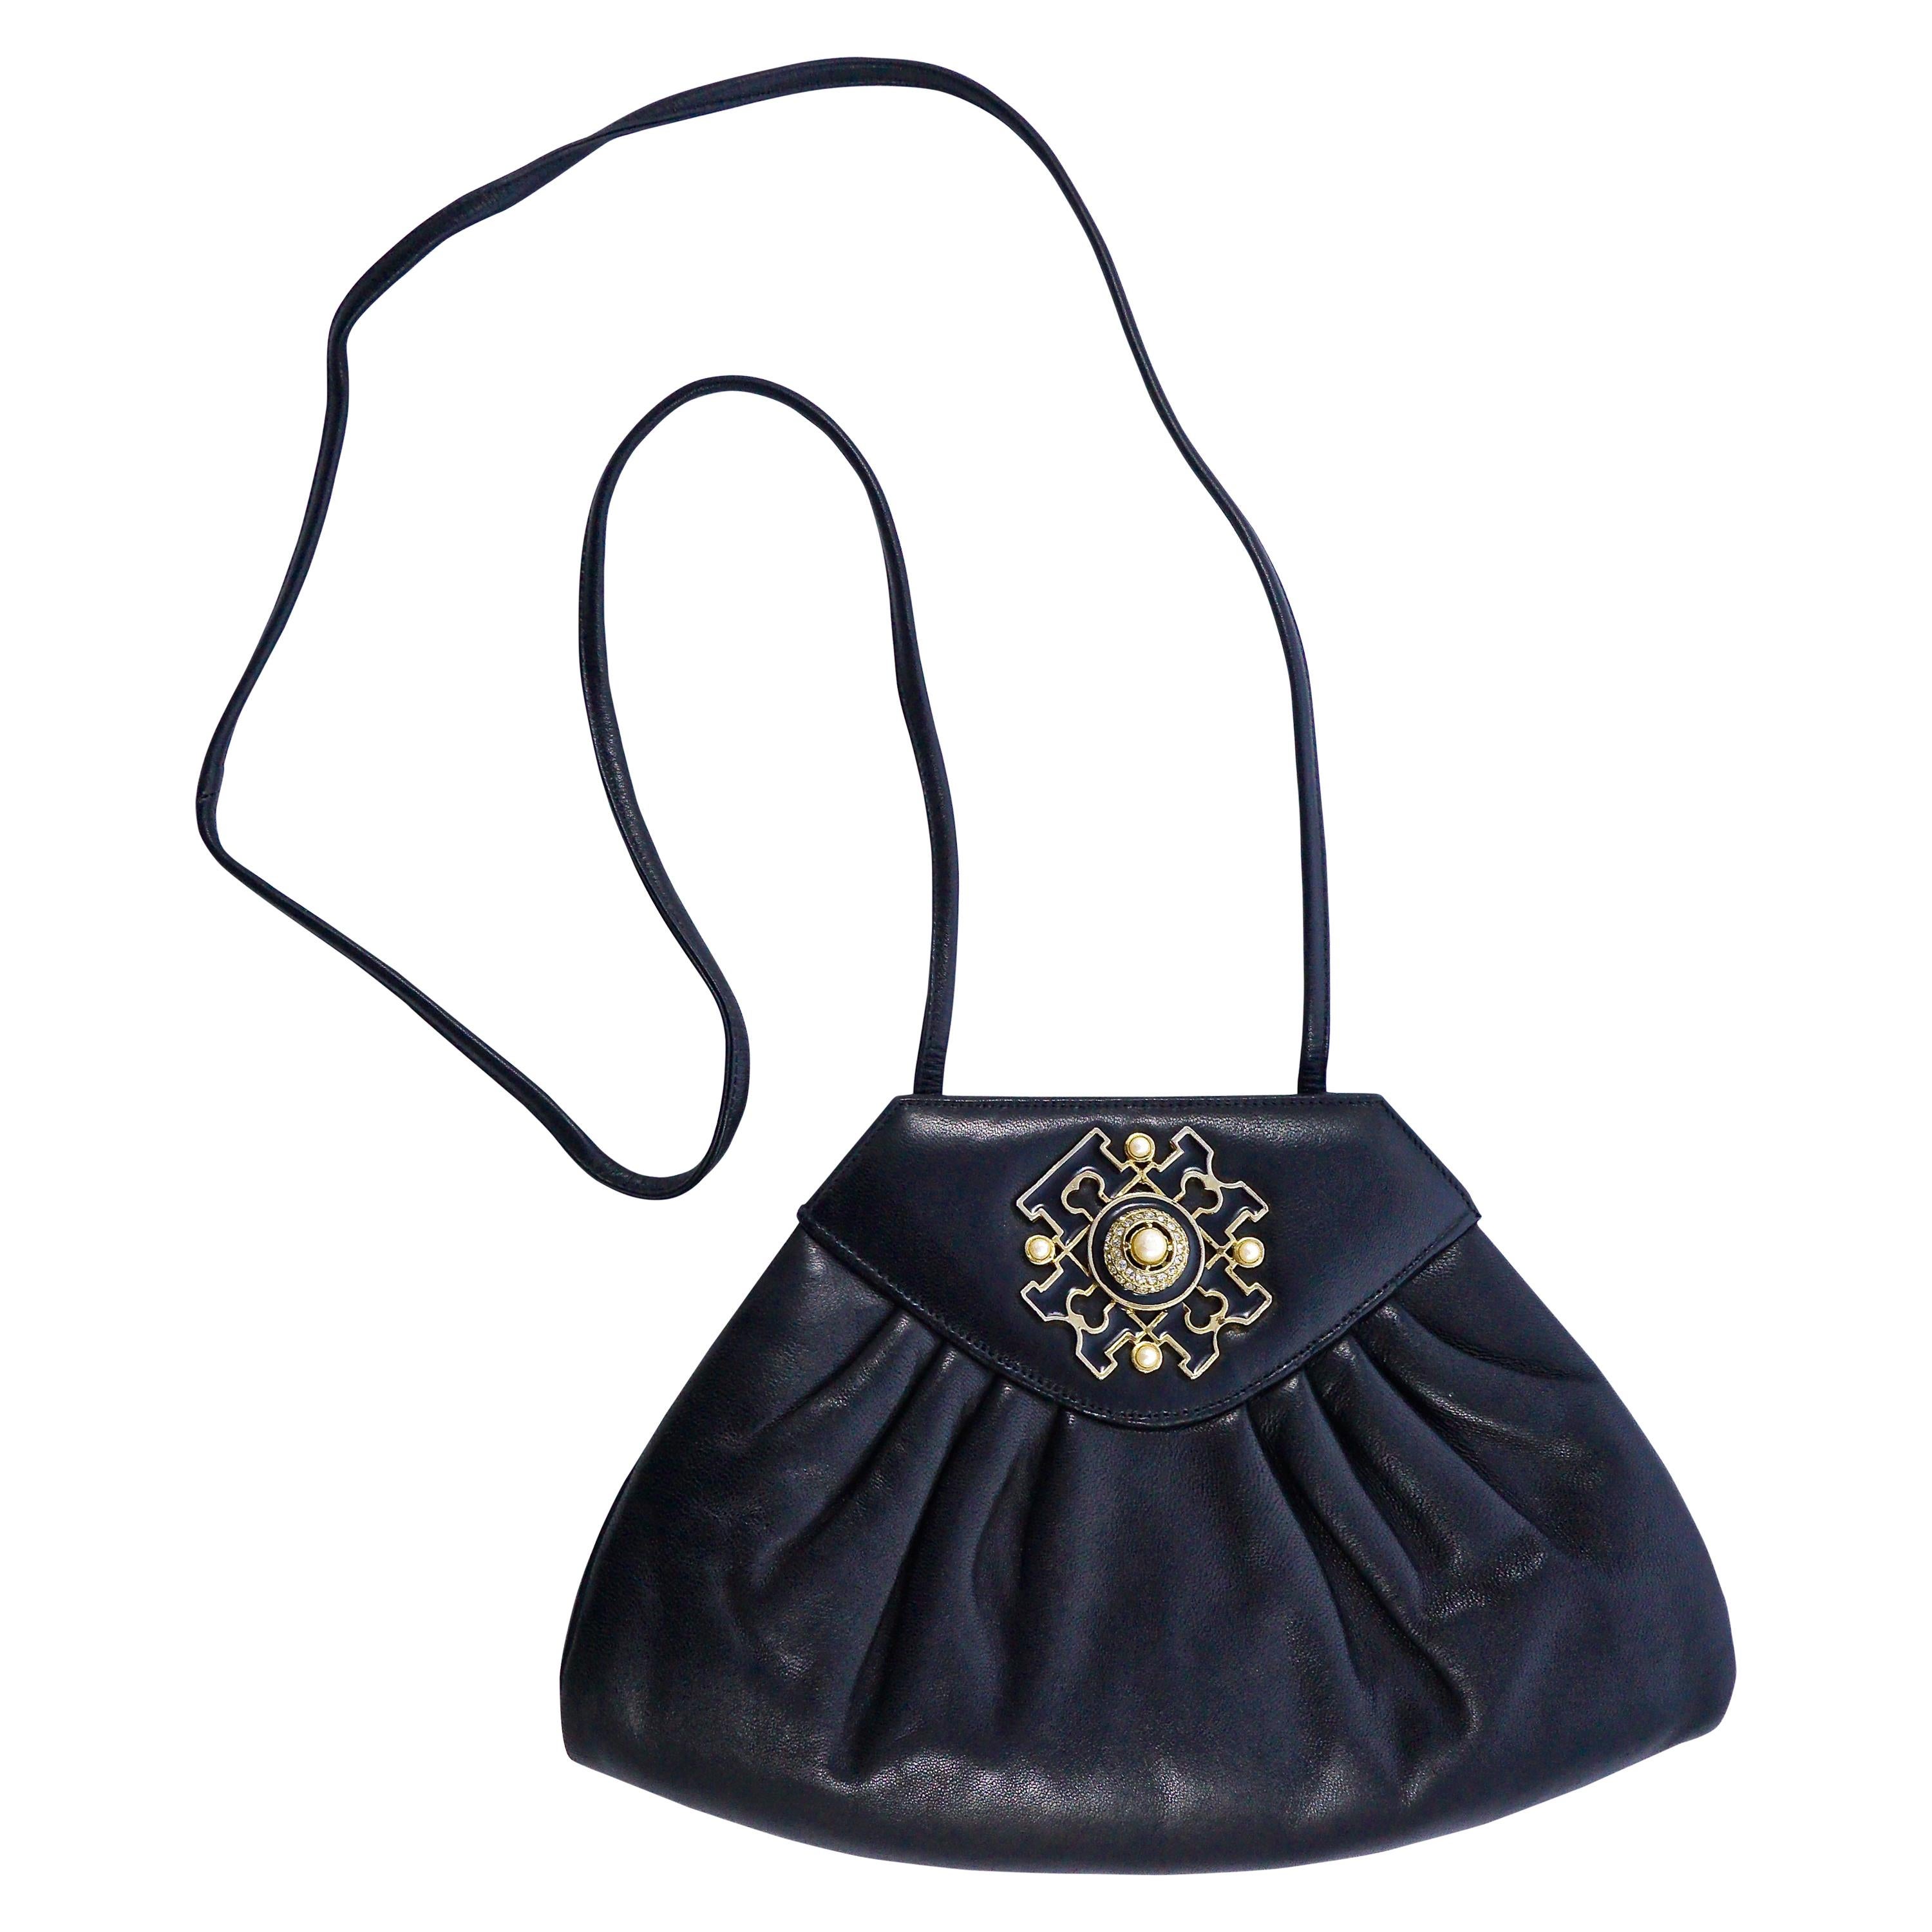 Susan Gail Black Leather Shoulder Bag with Rhinestones Faux Pearls and Enamel 